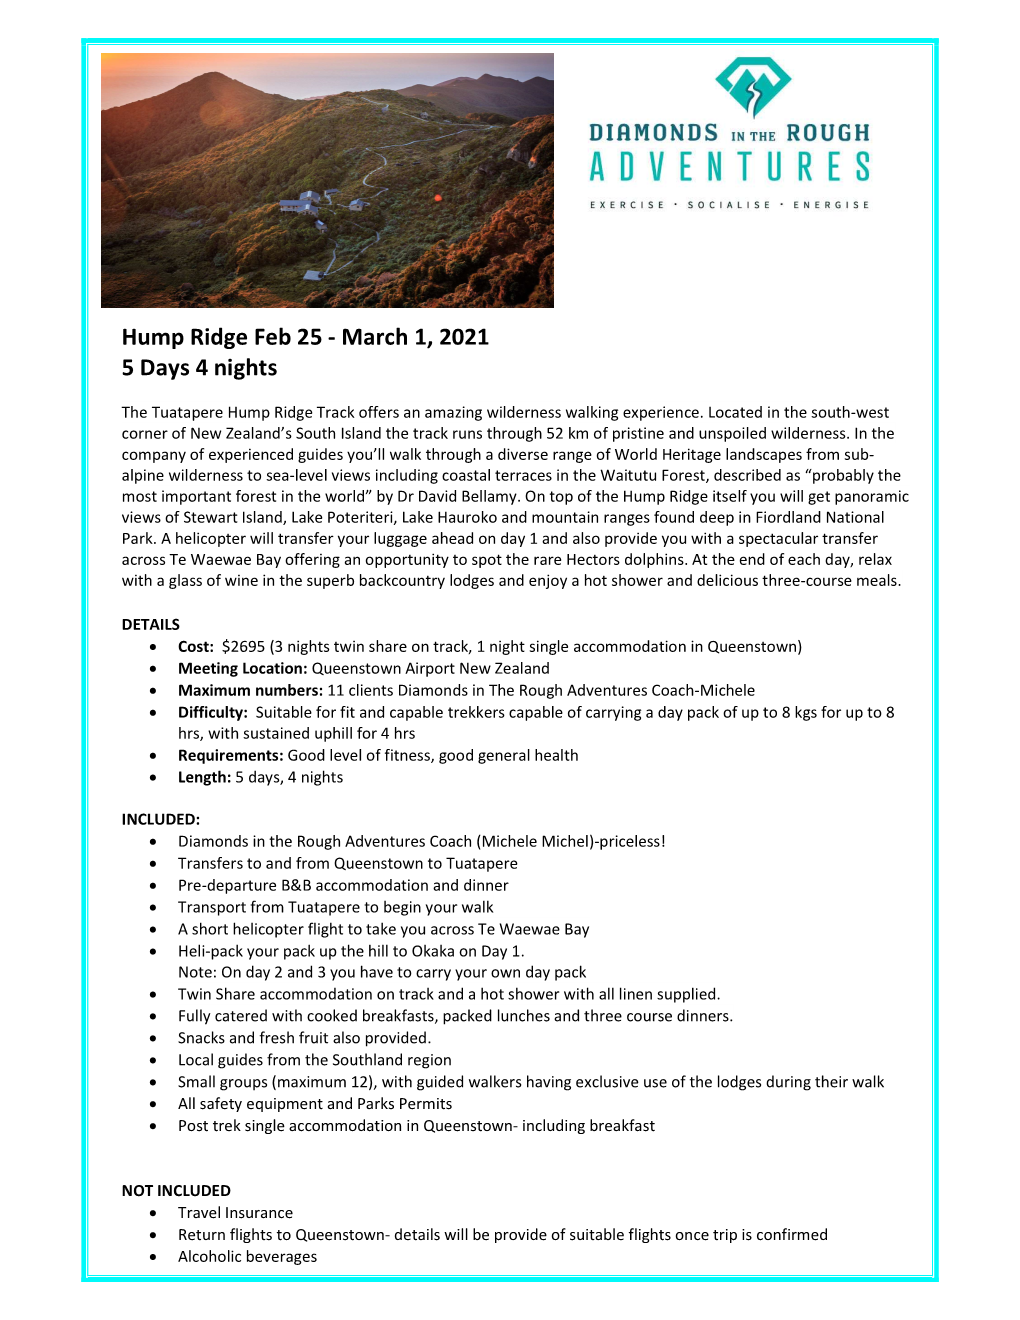 Hump Ridge Feb 25 - March 1, 2021 5 Days 4 Nights